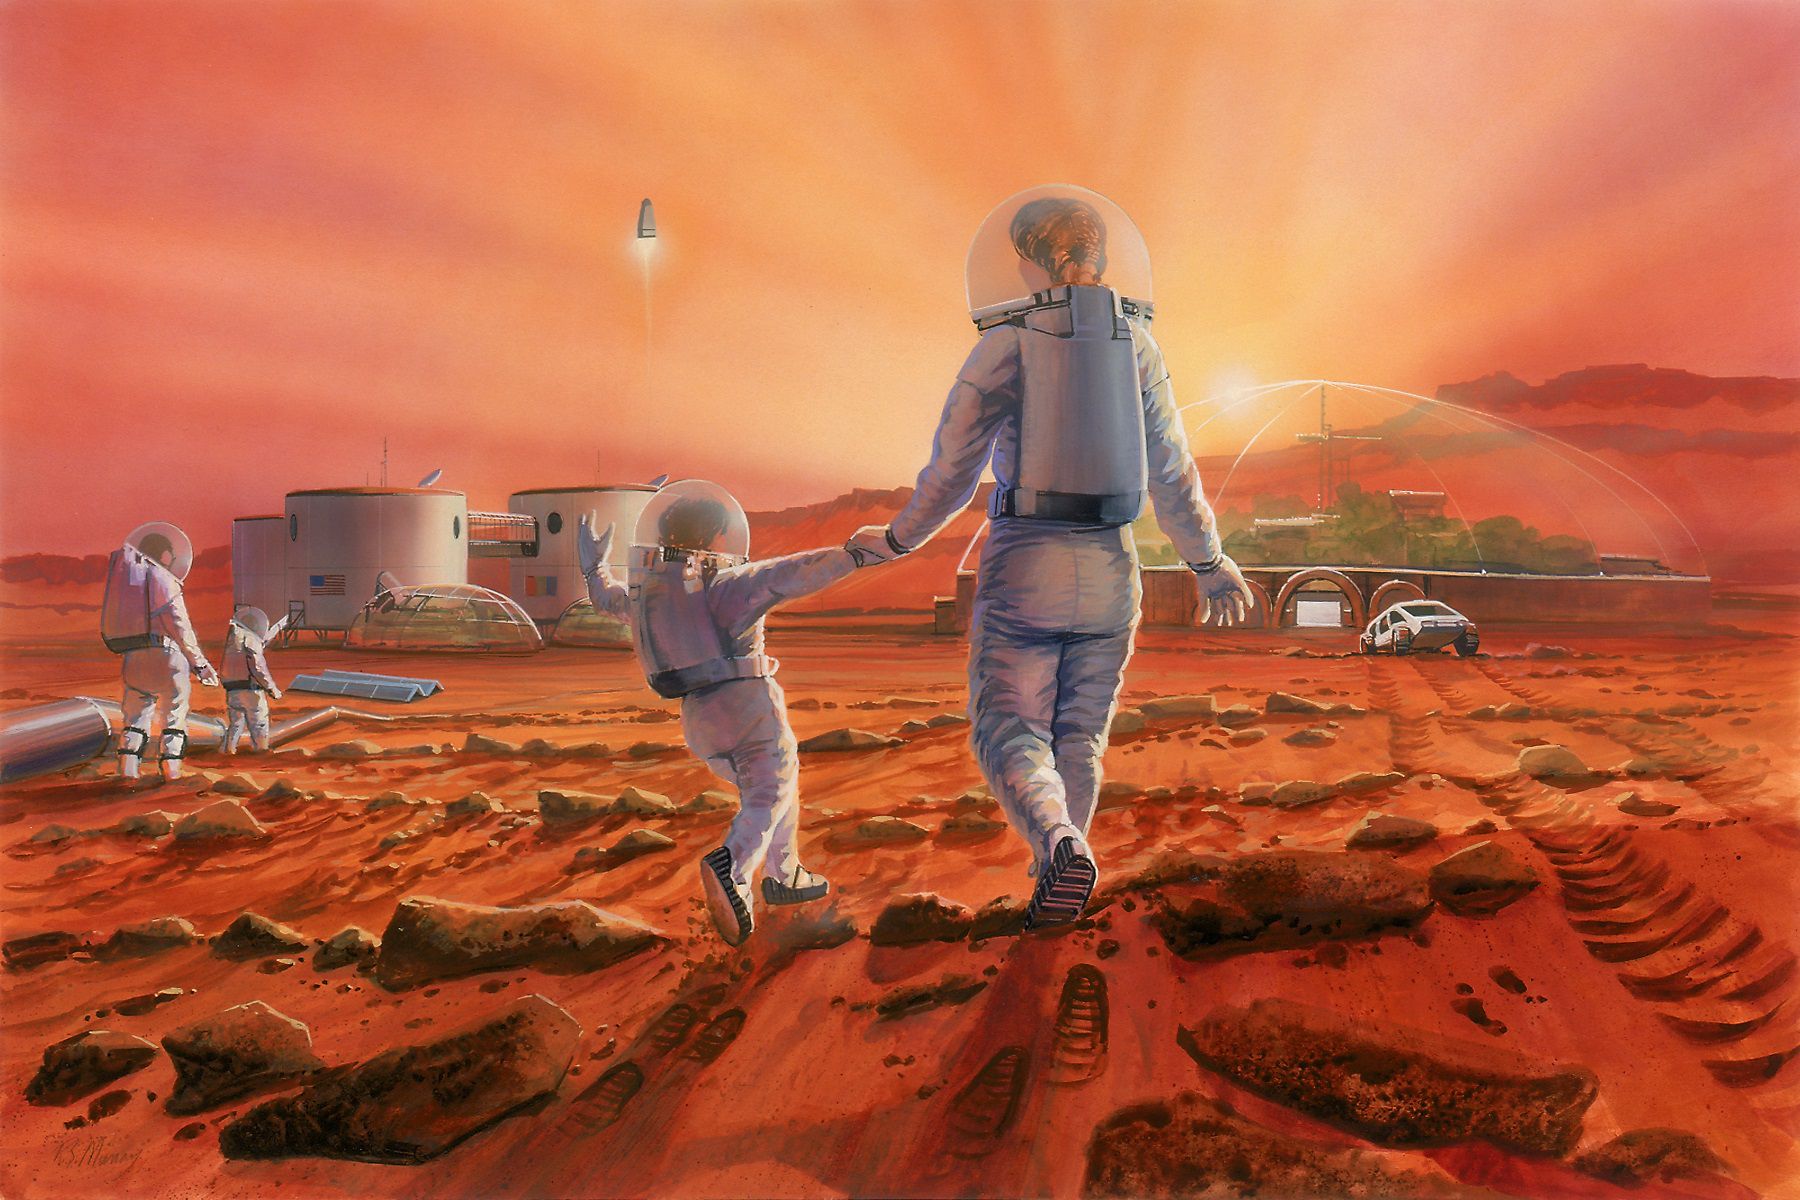 New life on Mars by Robert Murray (2001, The Mars Society)